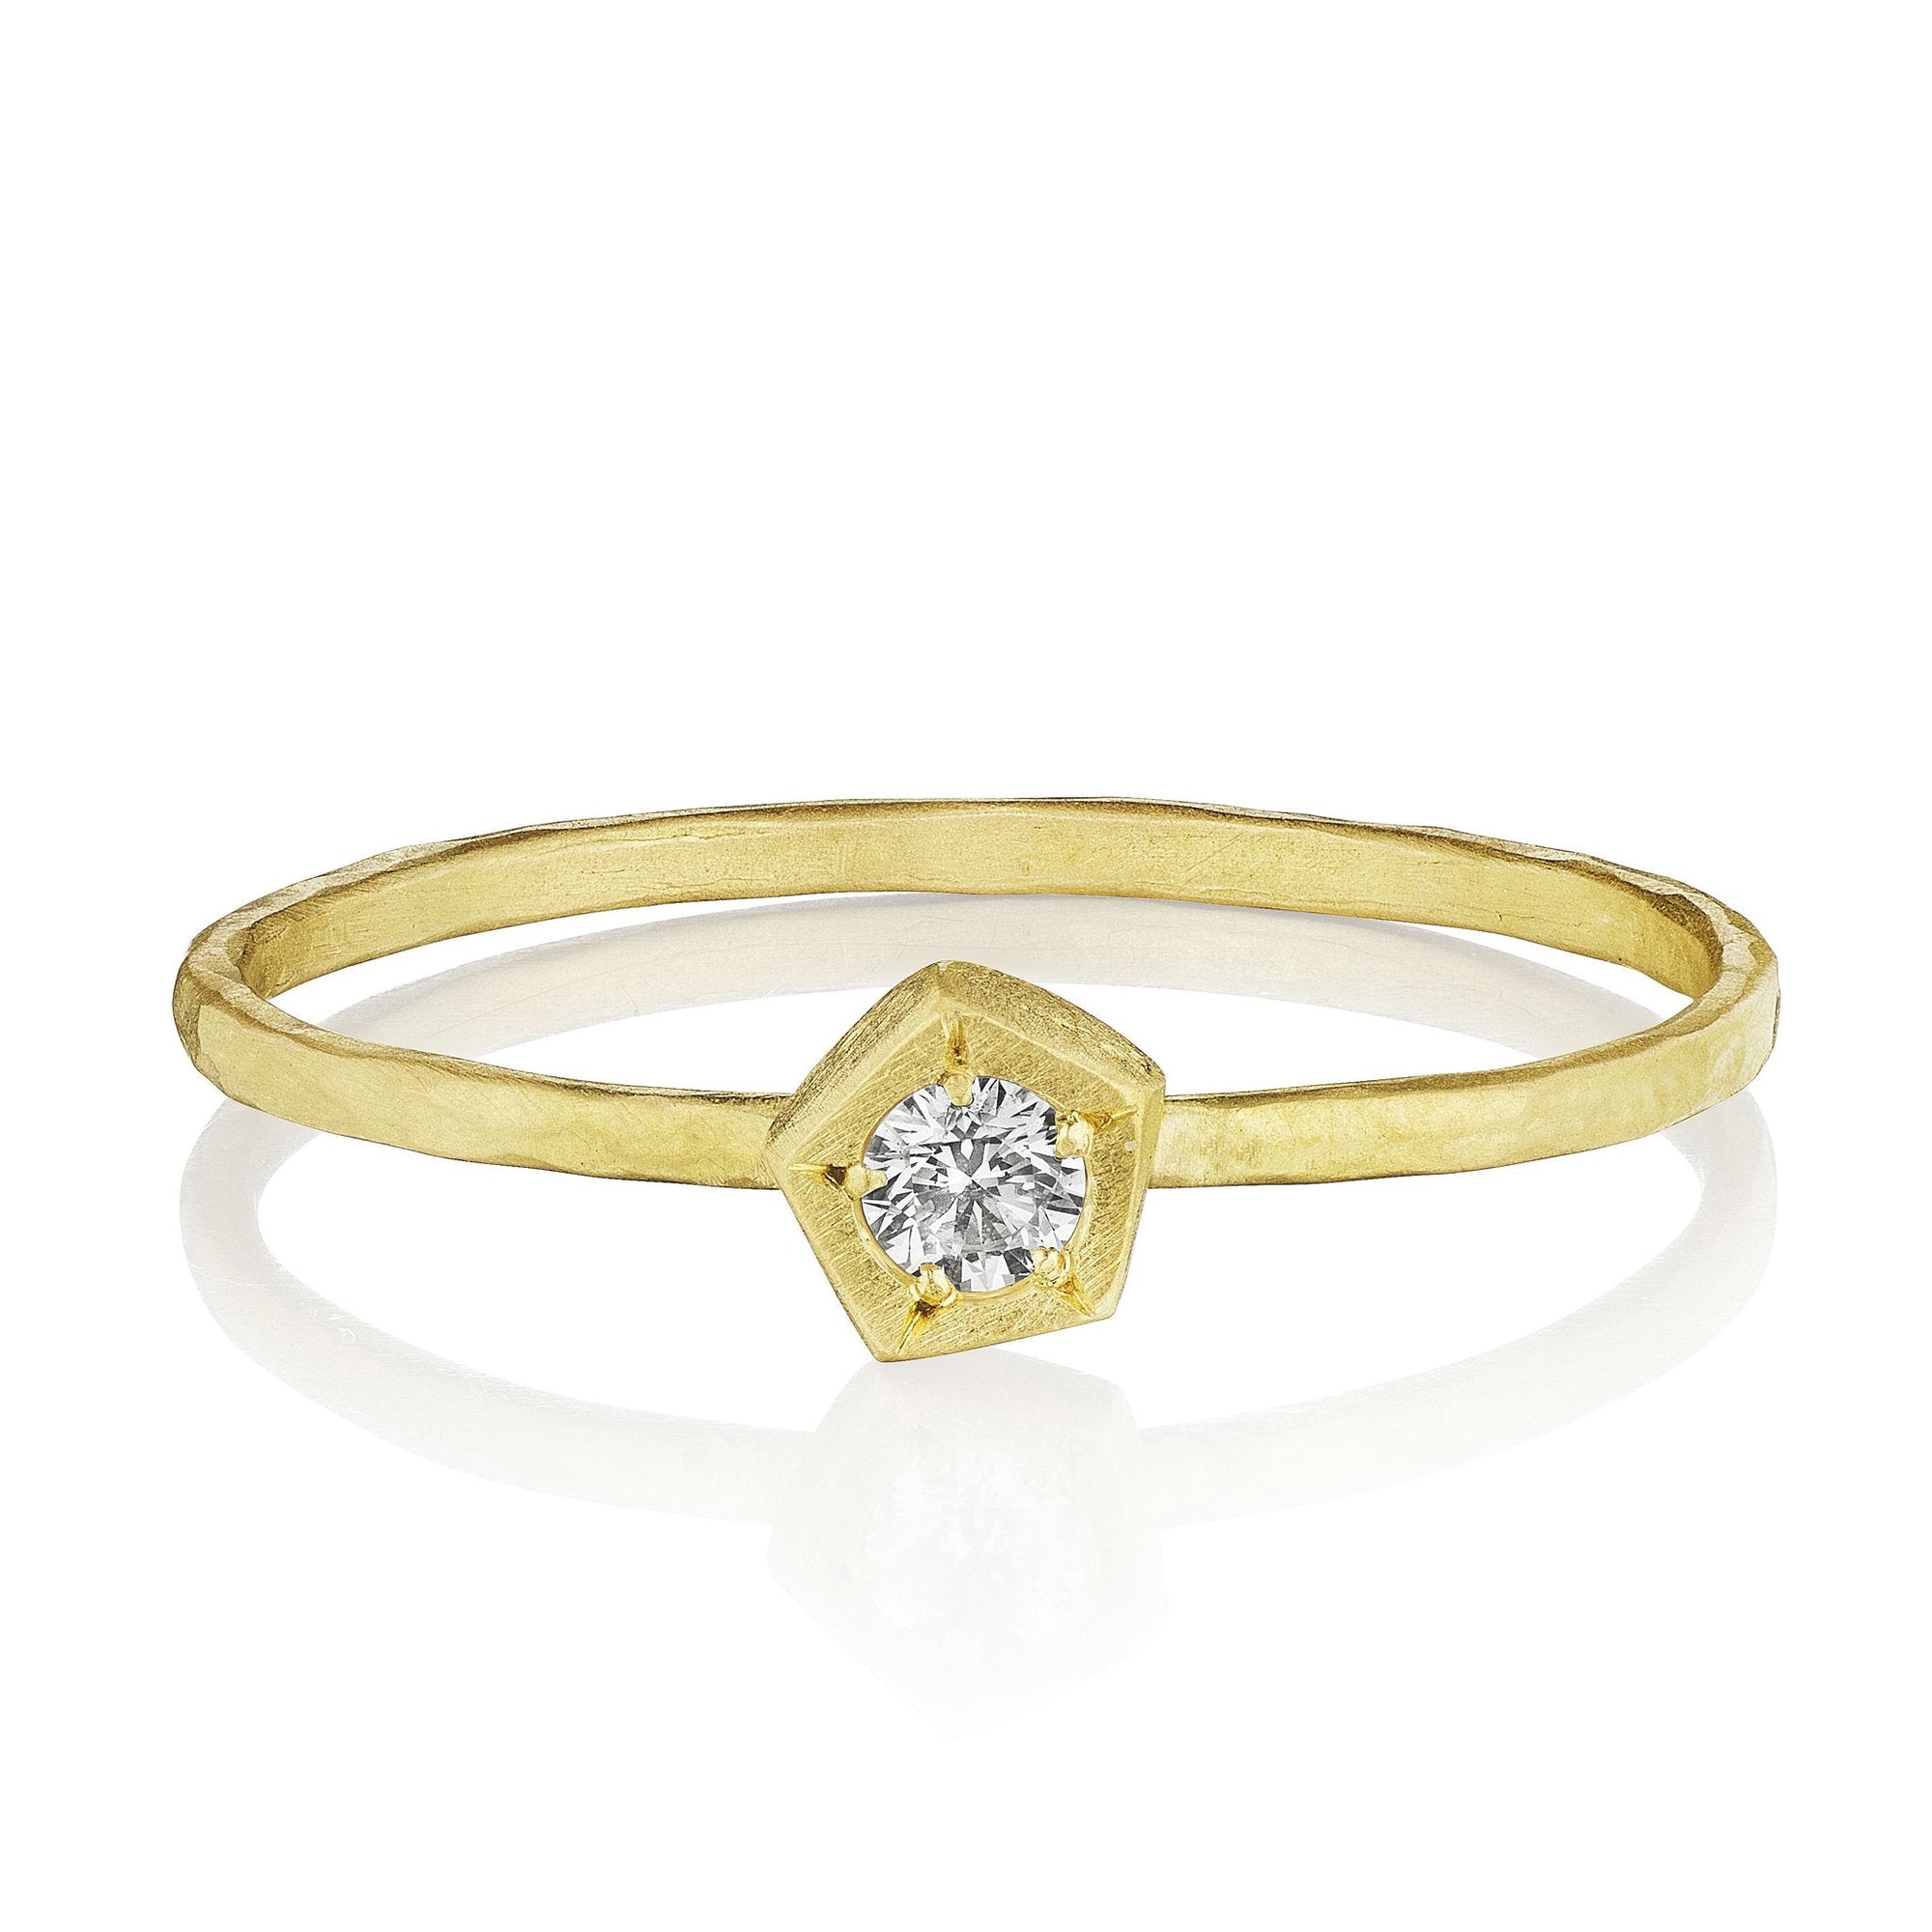 Annie Fensterstock 18K Gold "Rock" Ring with Bezel Set Diamond